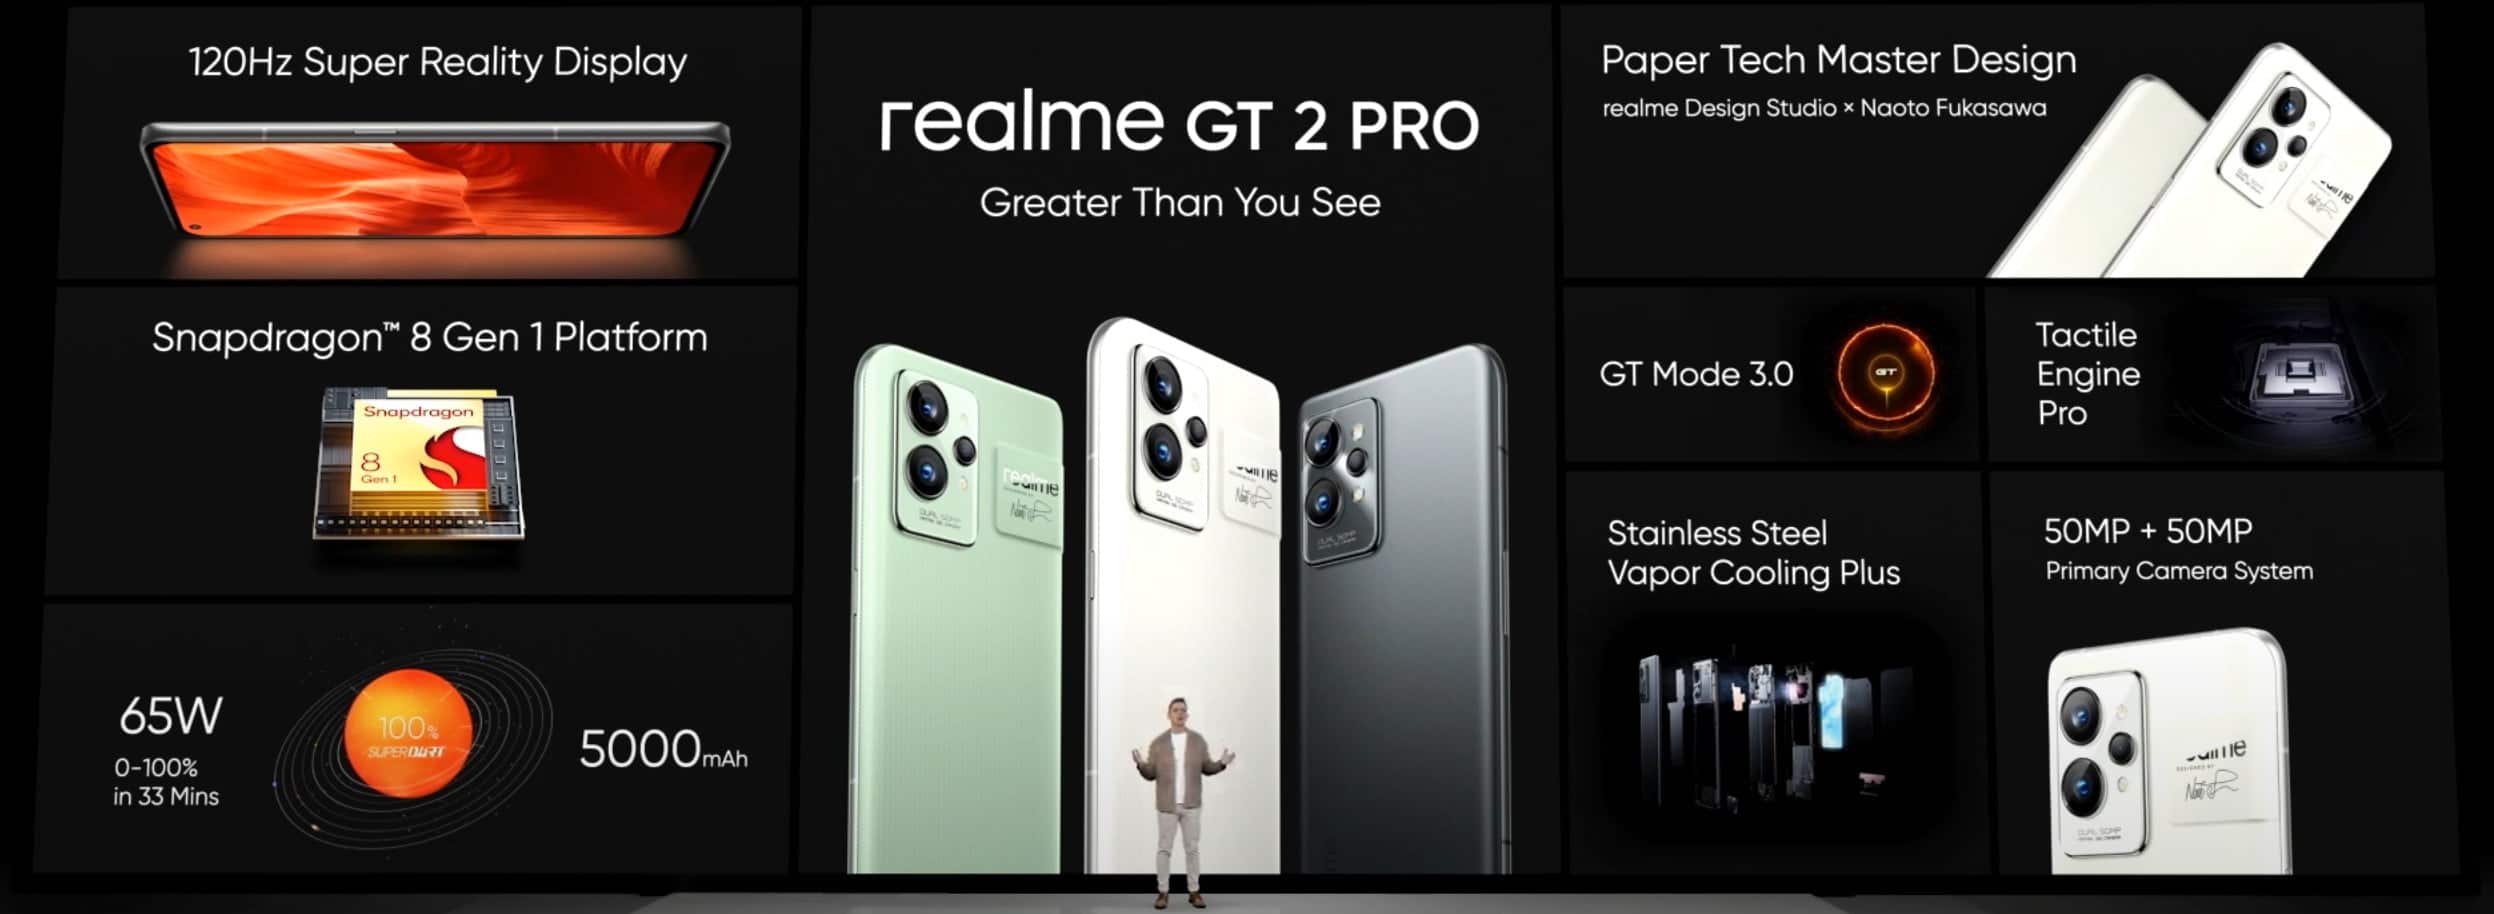 realme-gt-2-pro-global-specs